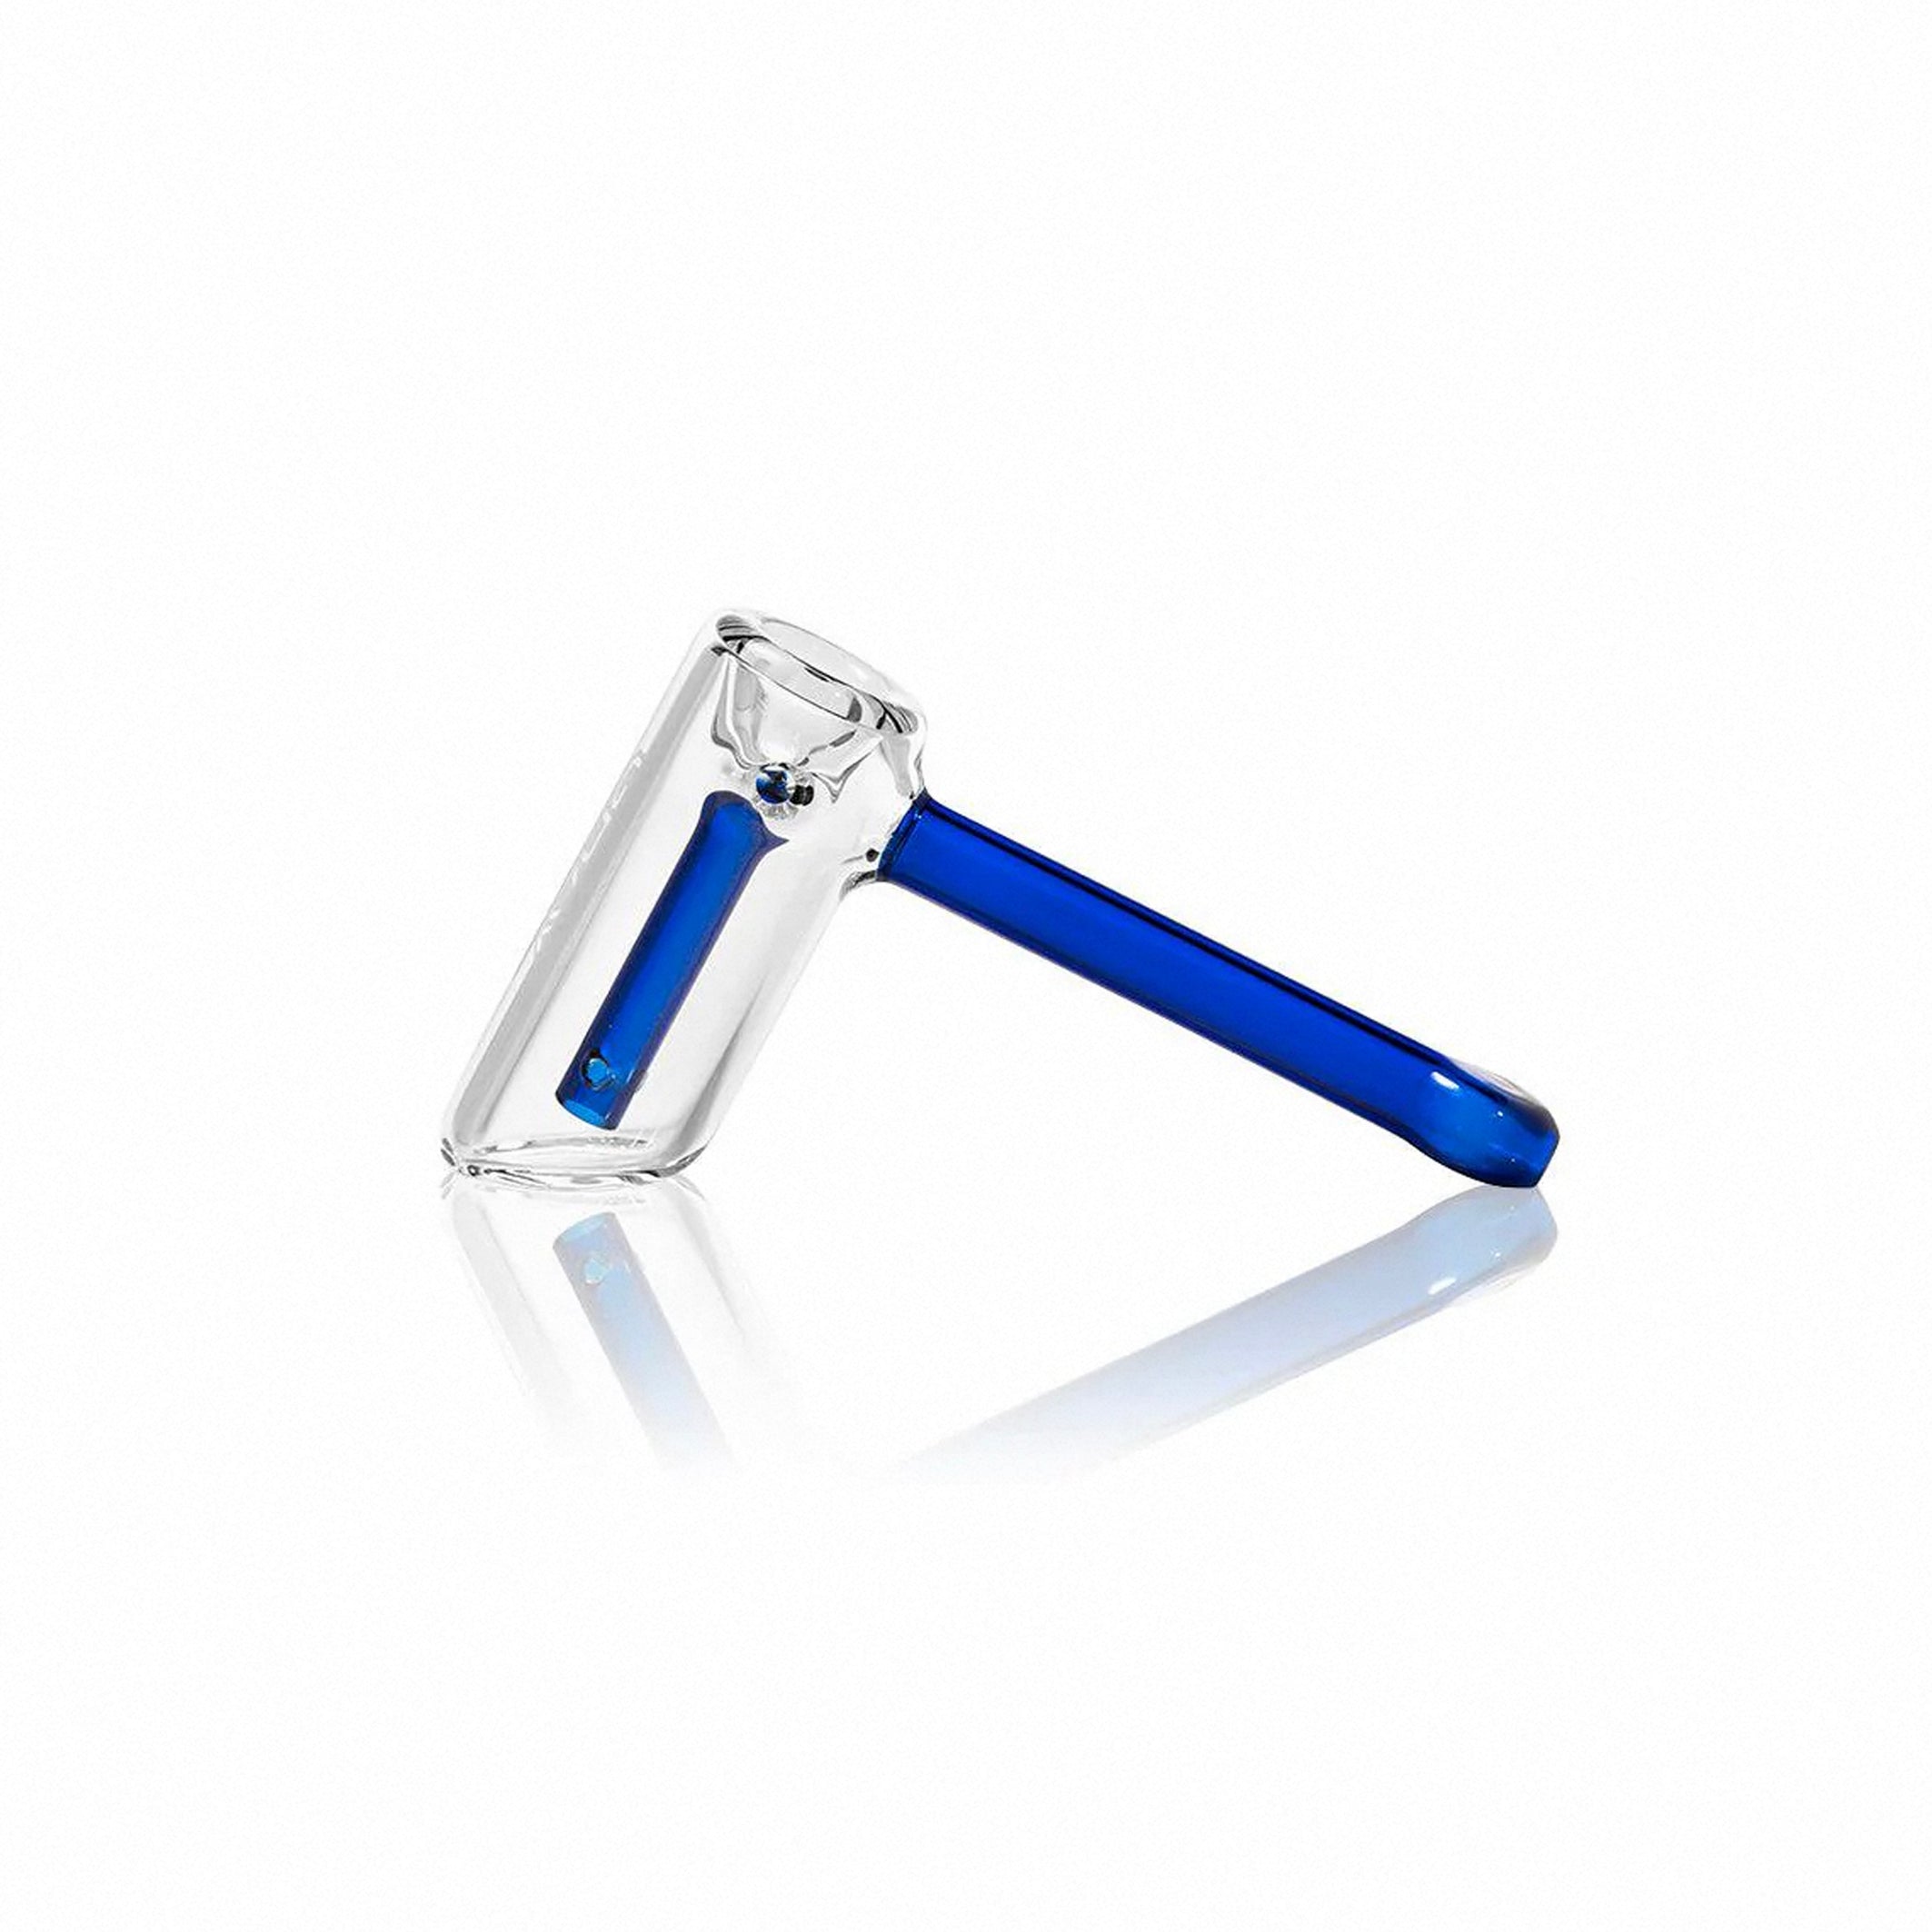 GRAV - Mini Hammer Bubbler - Clear-Blue